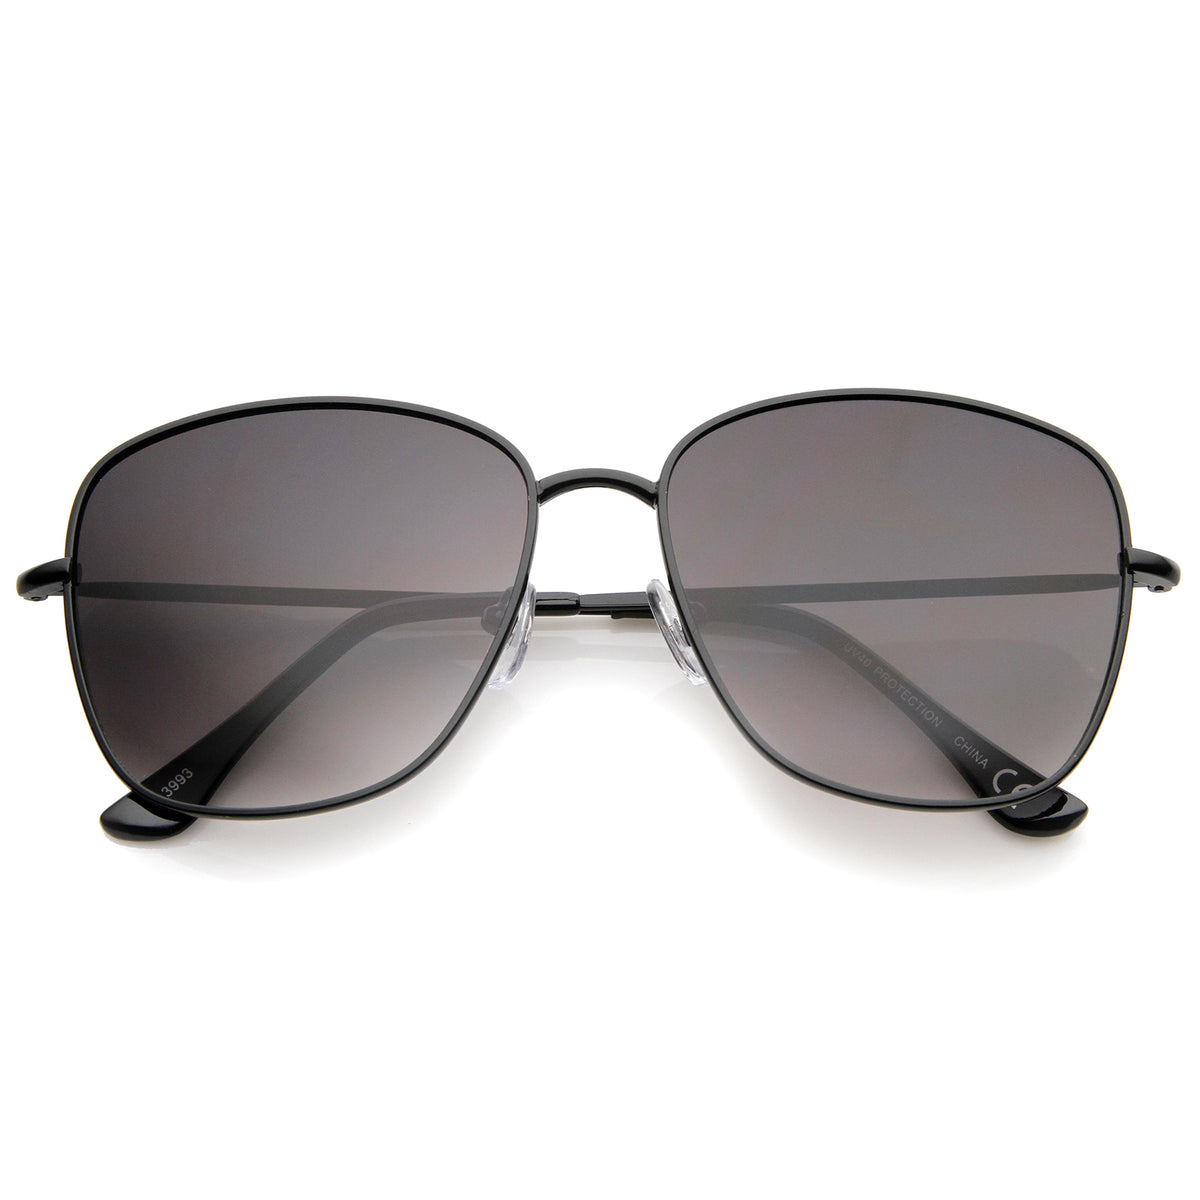 Contemporary Modern Fashion Full Metal Slim Temple Square Sunglasses 5 ...